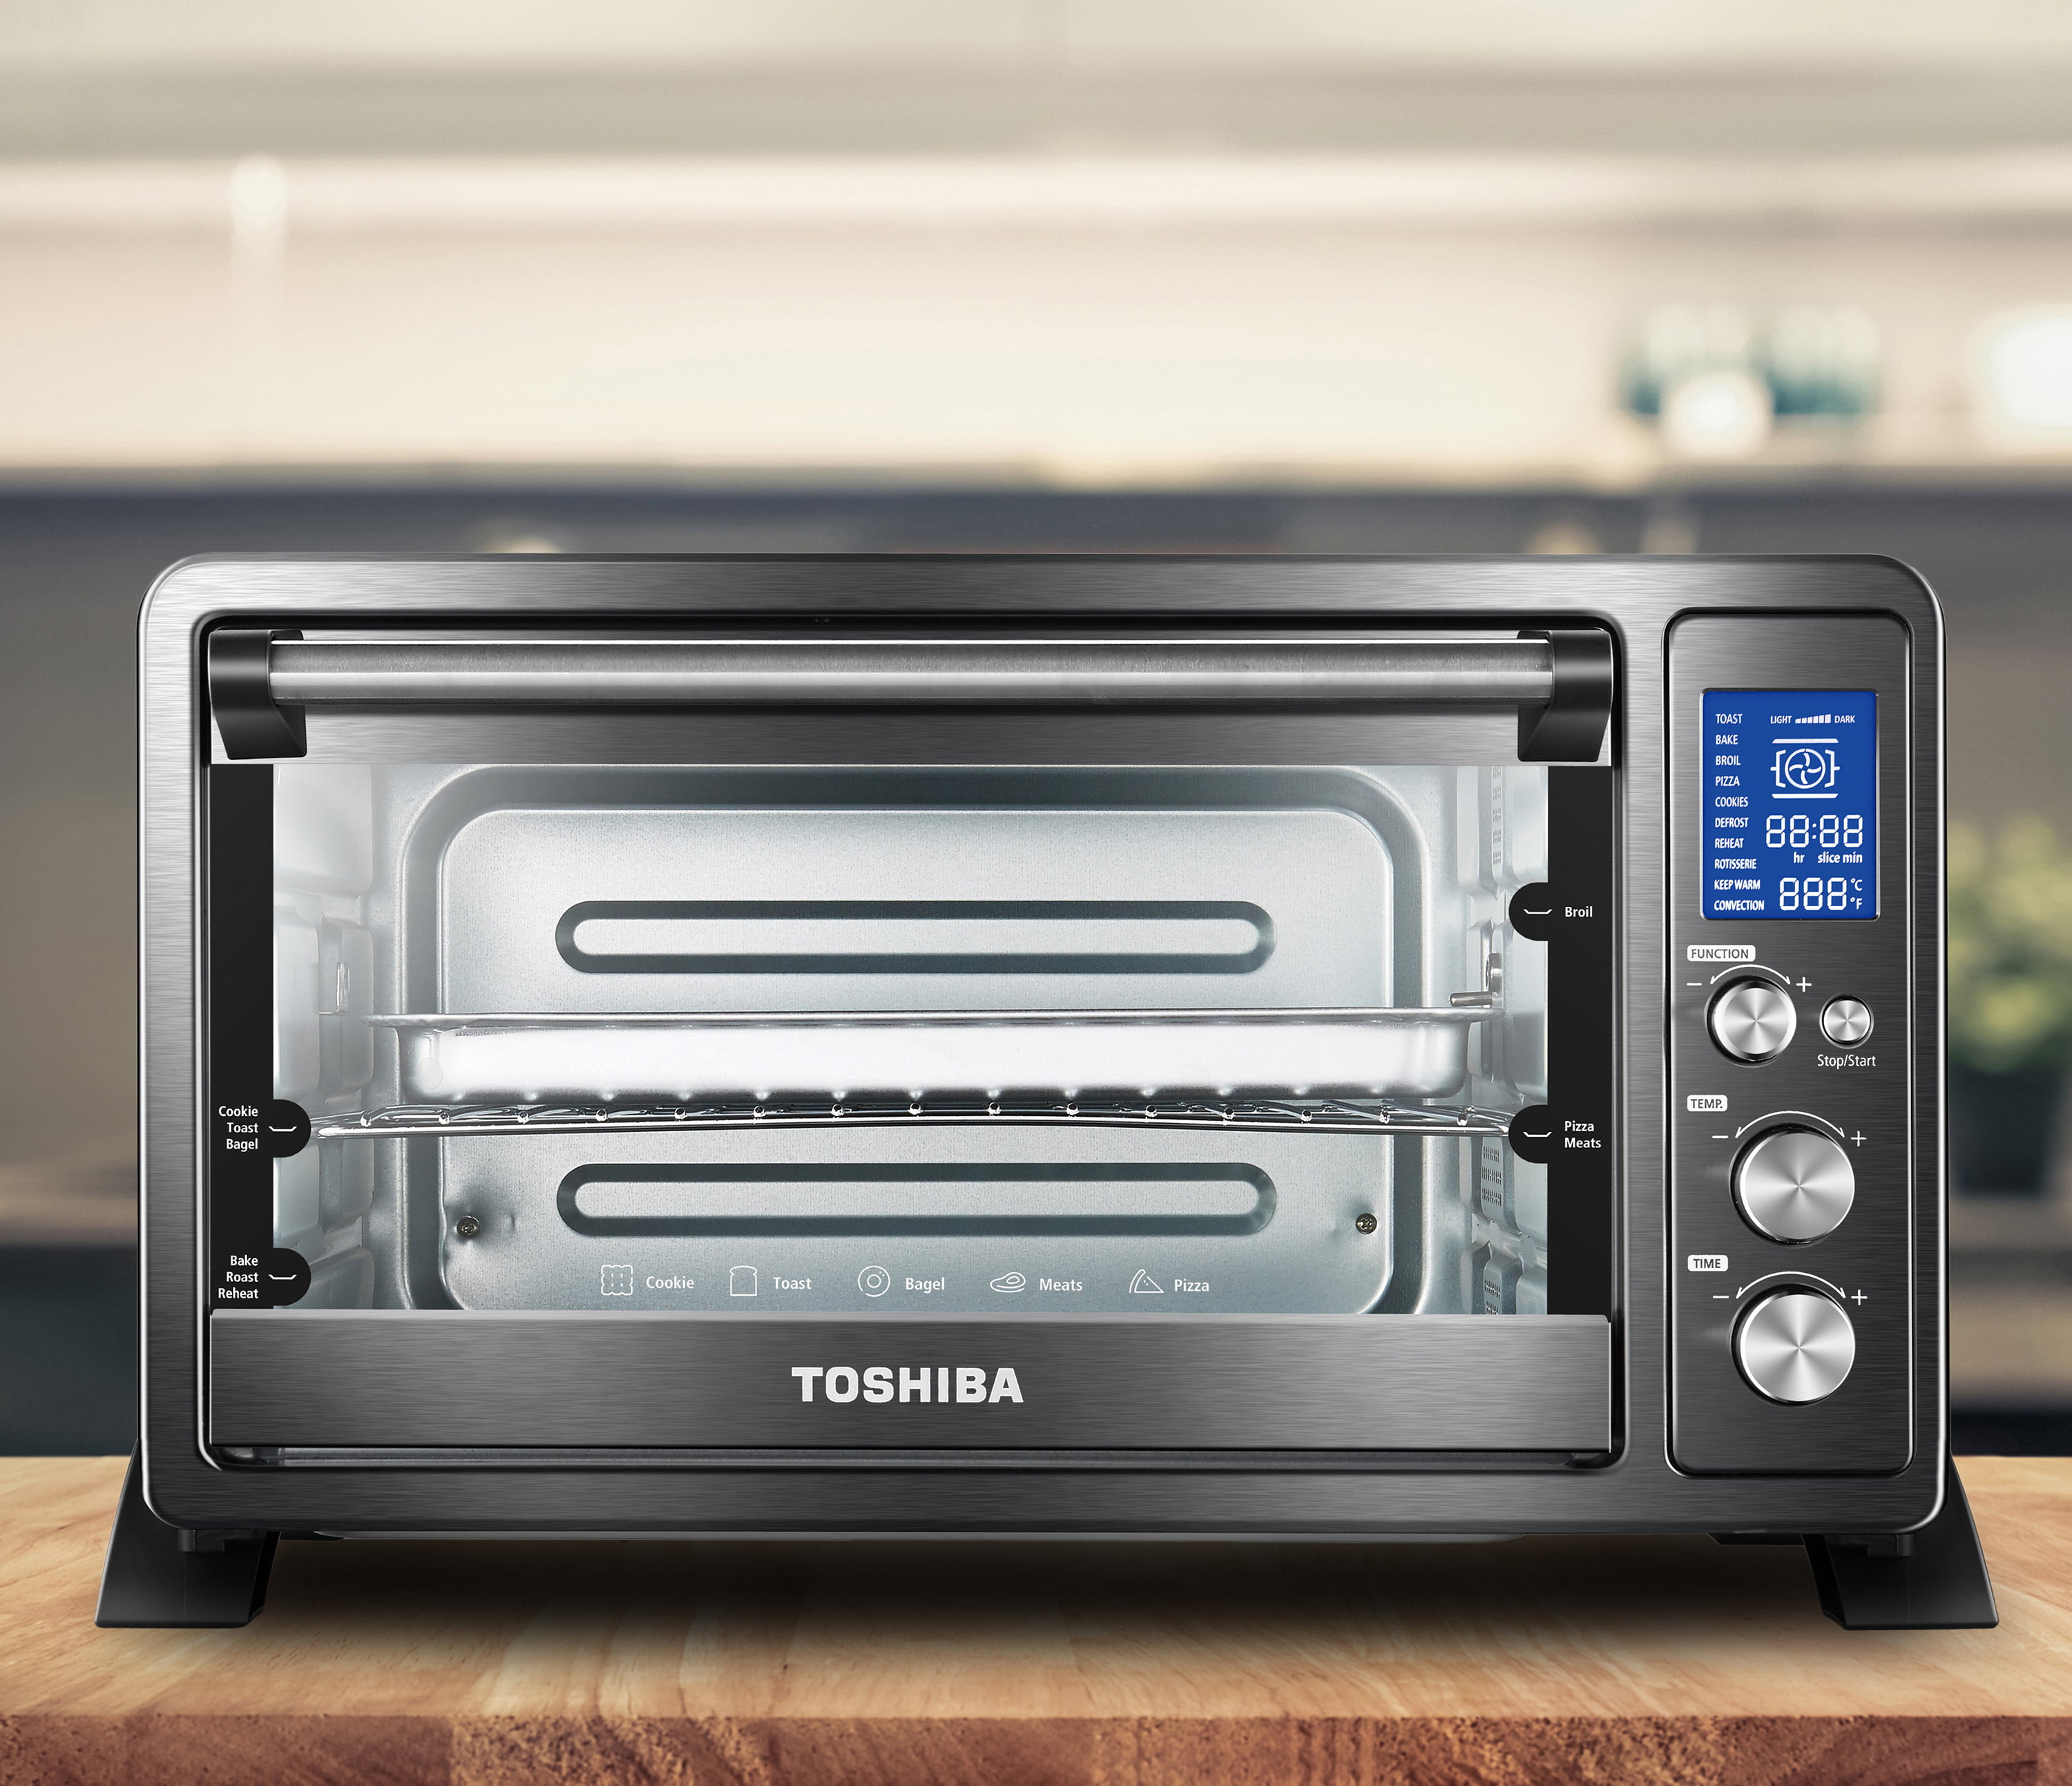 Toshiba Toaster Oven